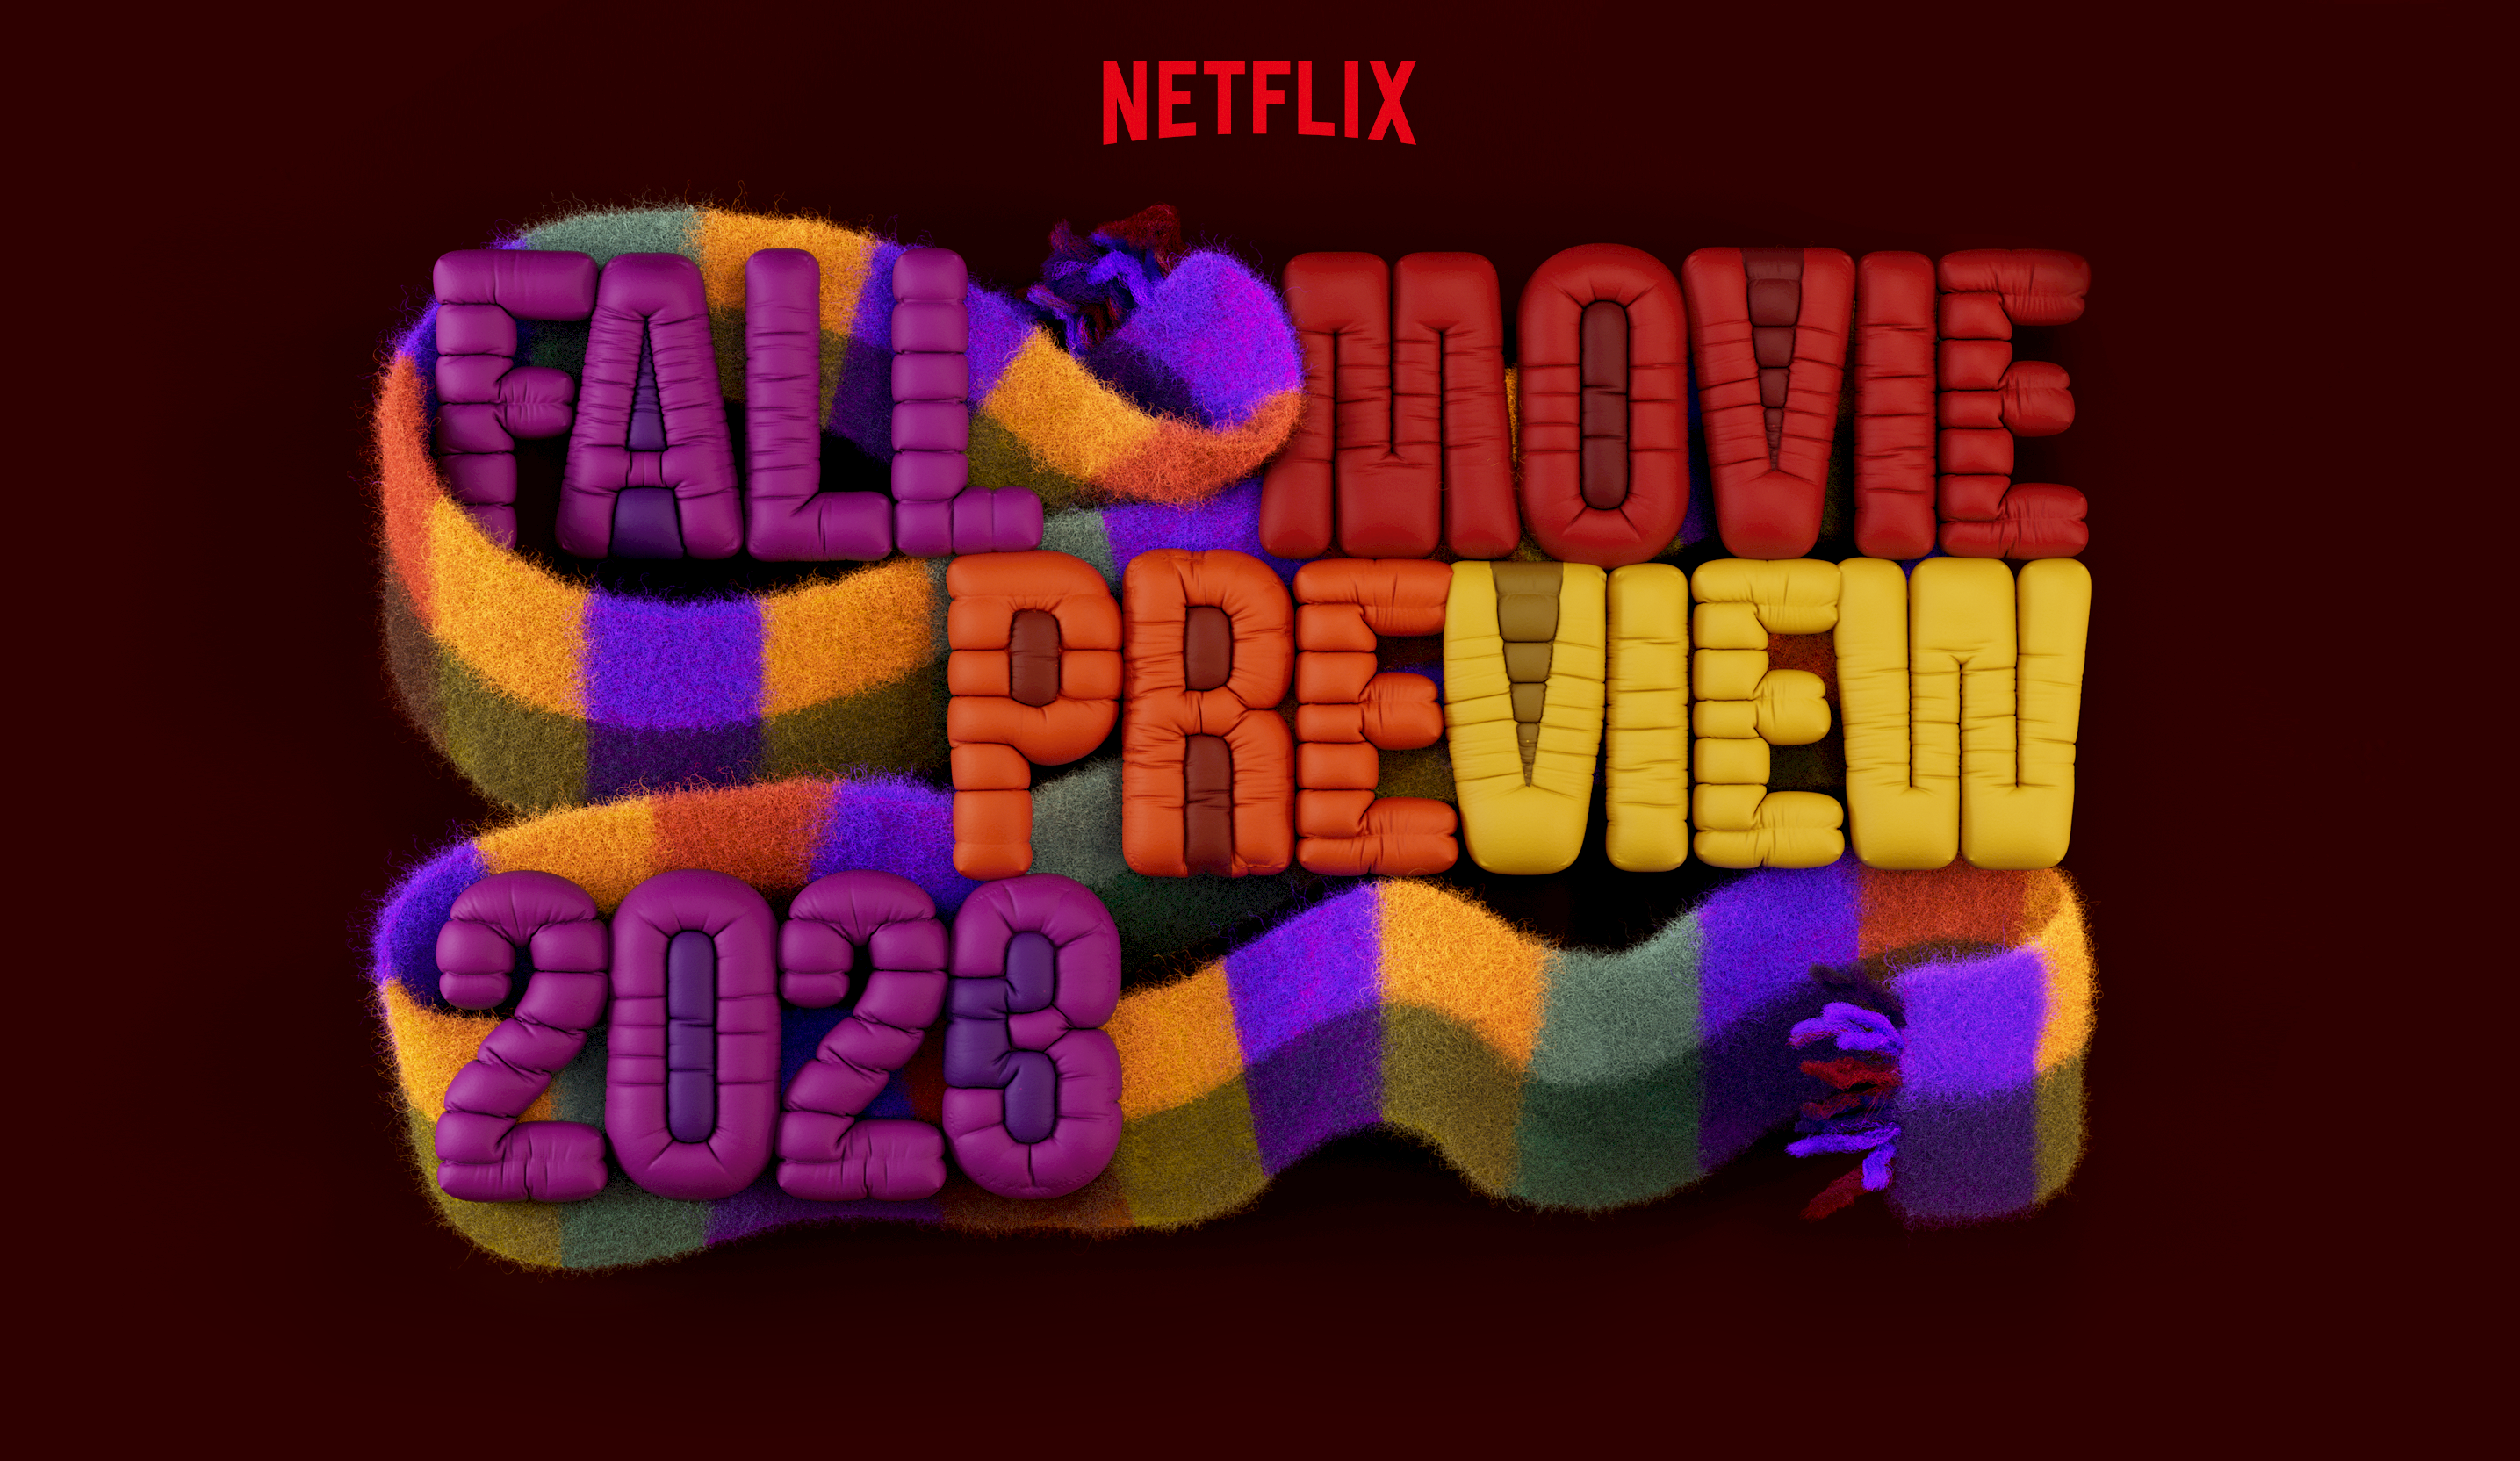 Estreias do segundo semestre de 2023 na Netflix - About Netflix